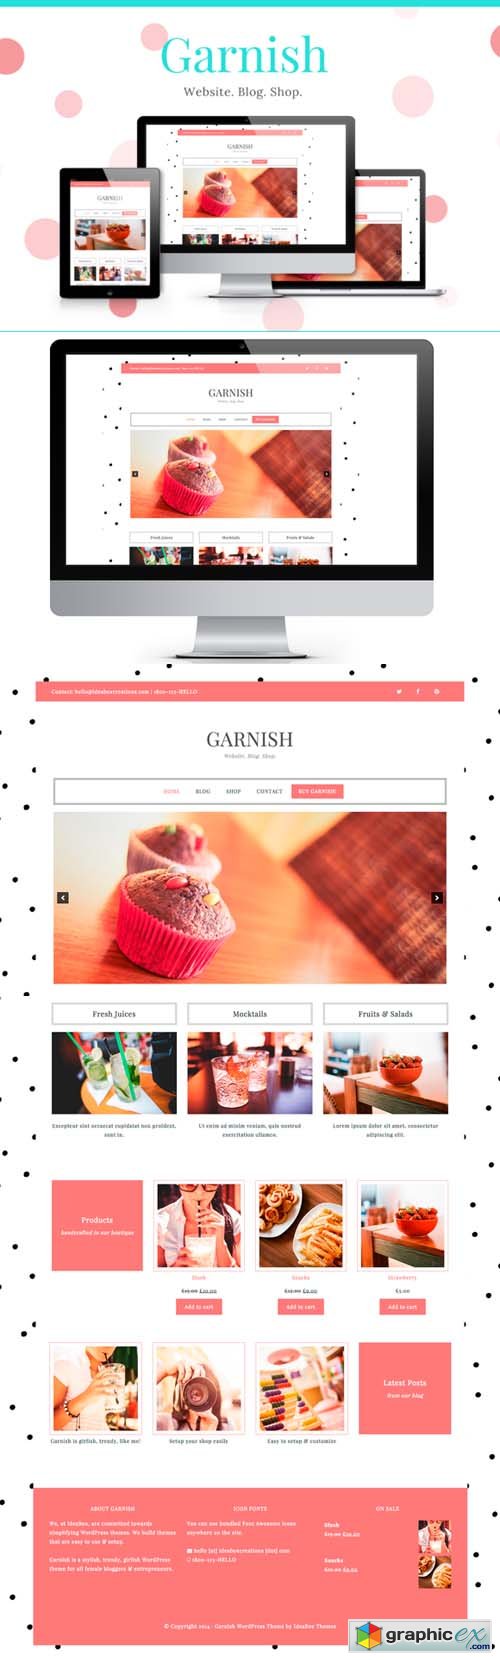 Garnish - WordPress Theme